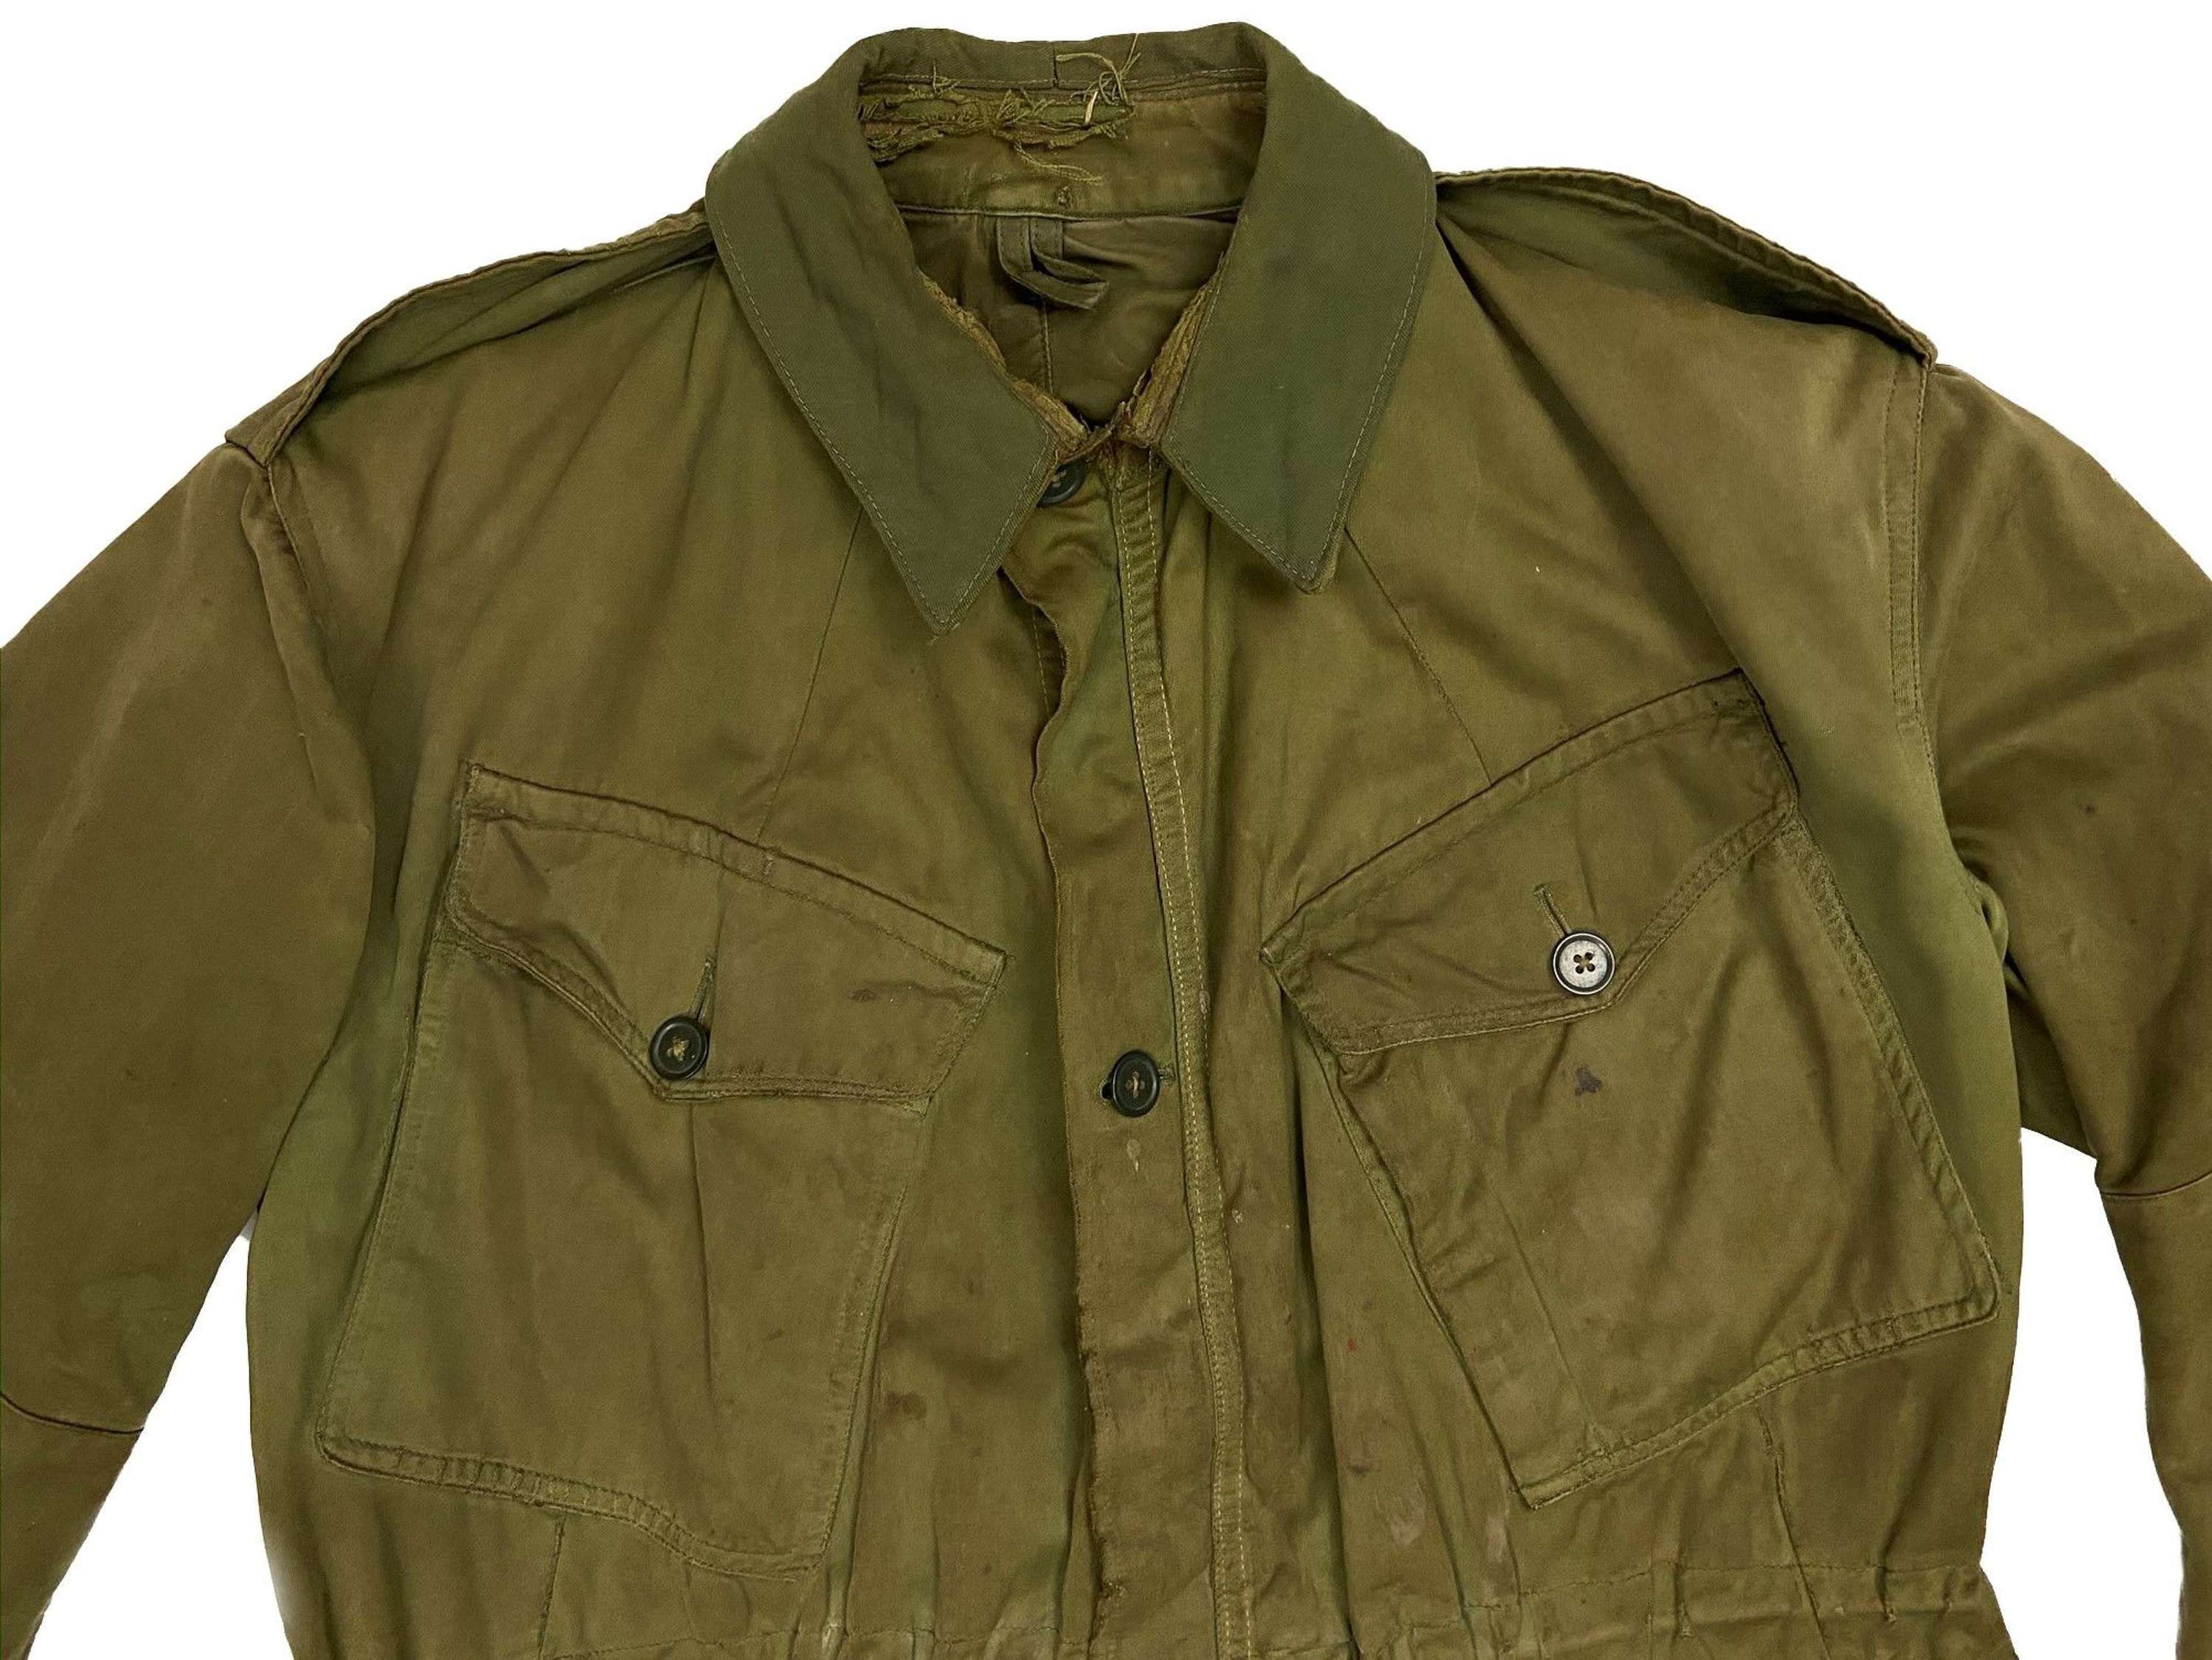 Original 1960 Pattern Combat Smock in General jackets & coats